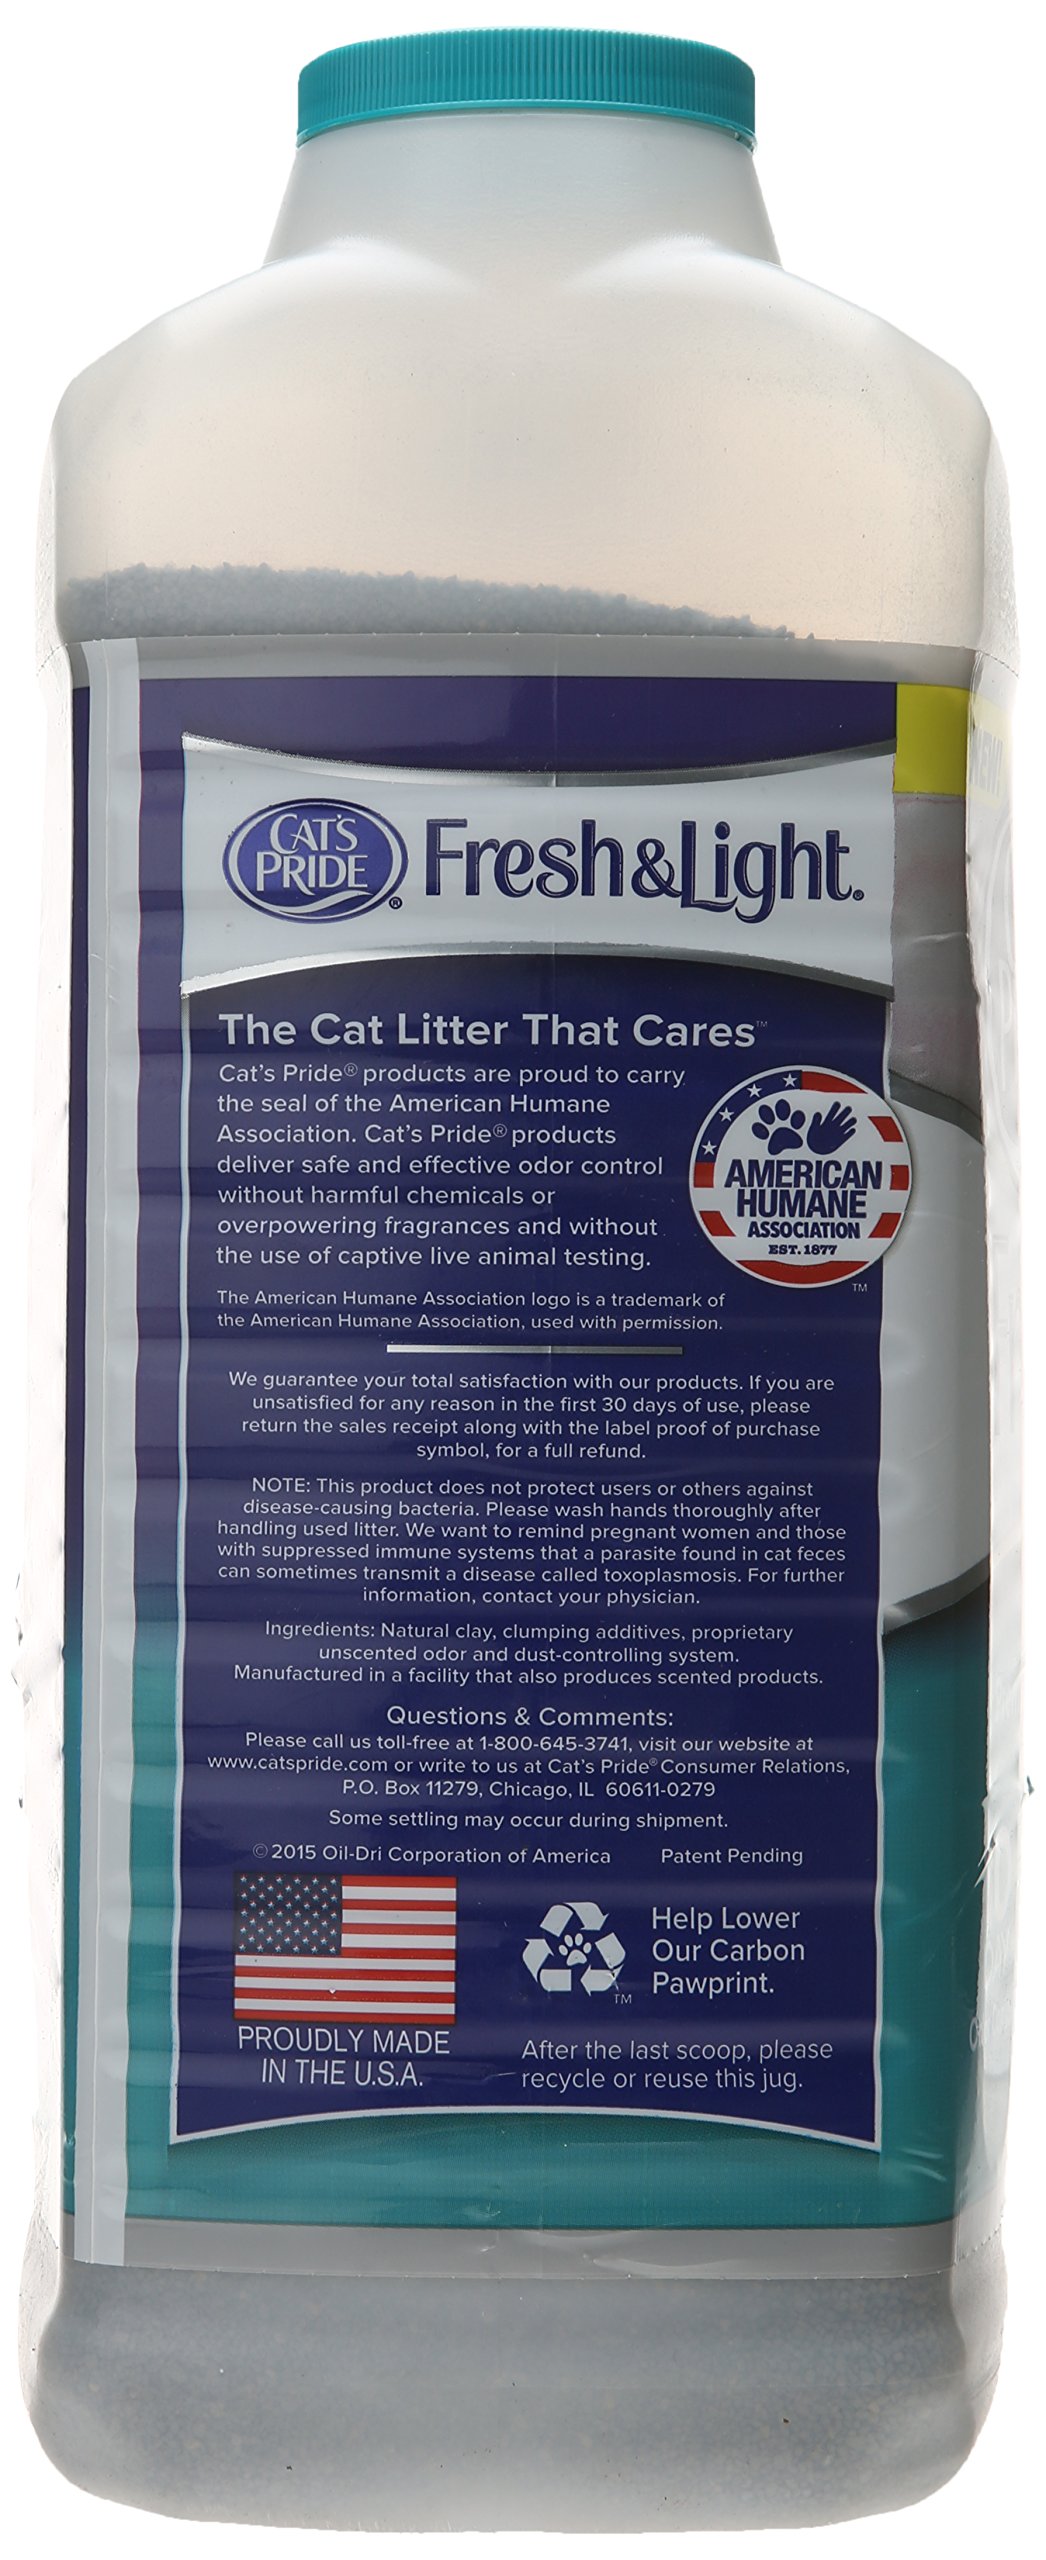 OIL-DRI CORPORATION OF AMERICA CATS PRIDE FRESH & LIGHT ULTIMATE CARE FRAGRANCE FREE LITTER 12LB - image 5 of 5